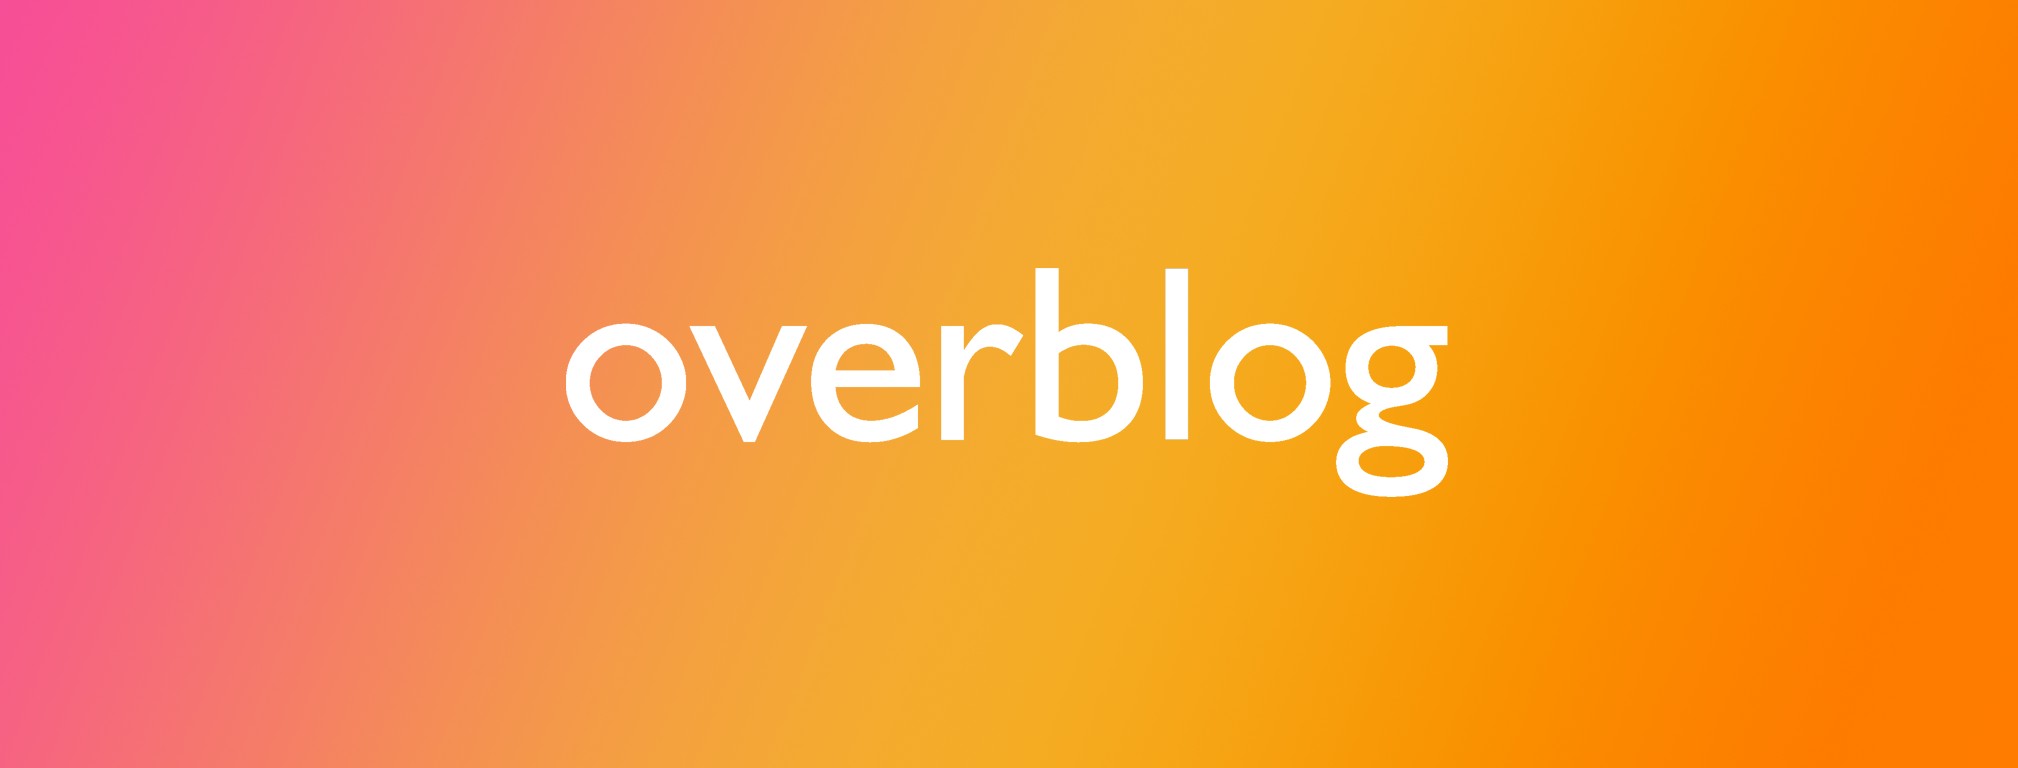 OverBlog | LinkedIn